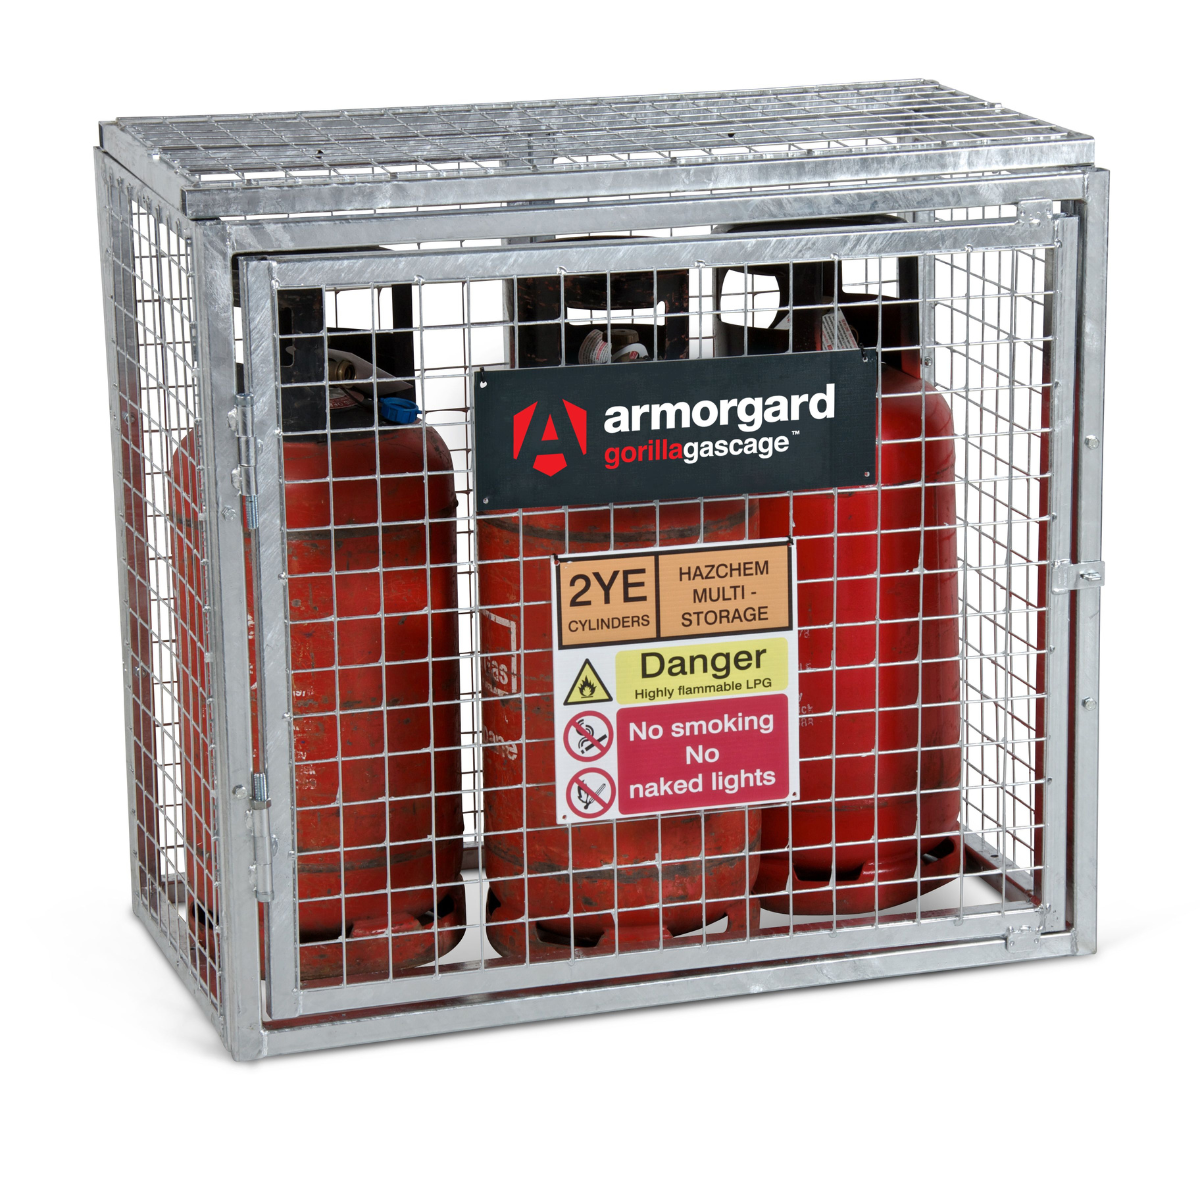 Armorgard GGC1 Gorilla Gas Cage 1012X563X931mm